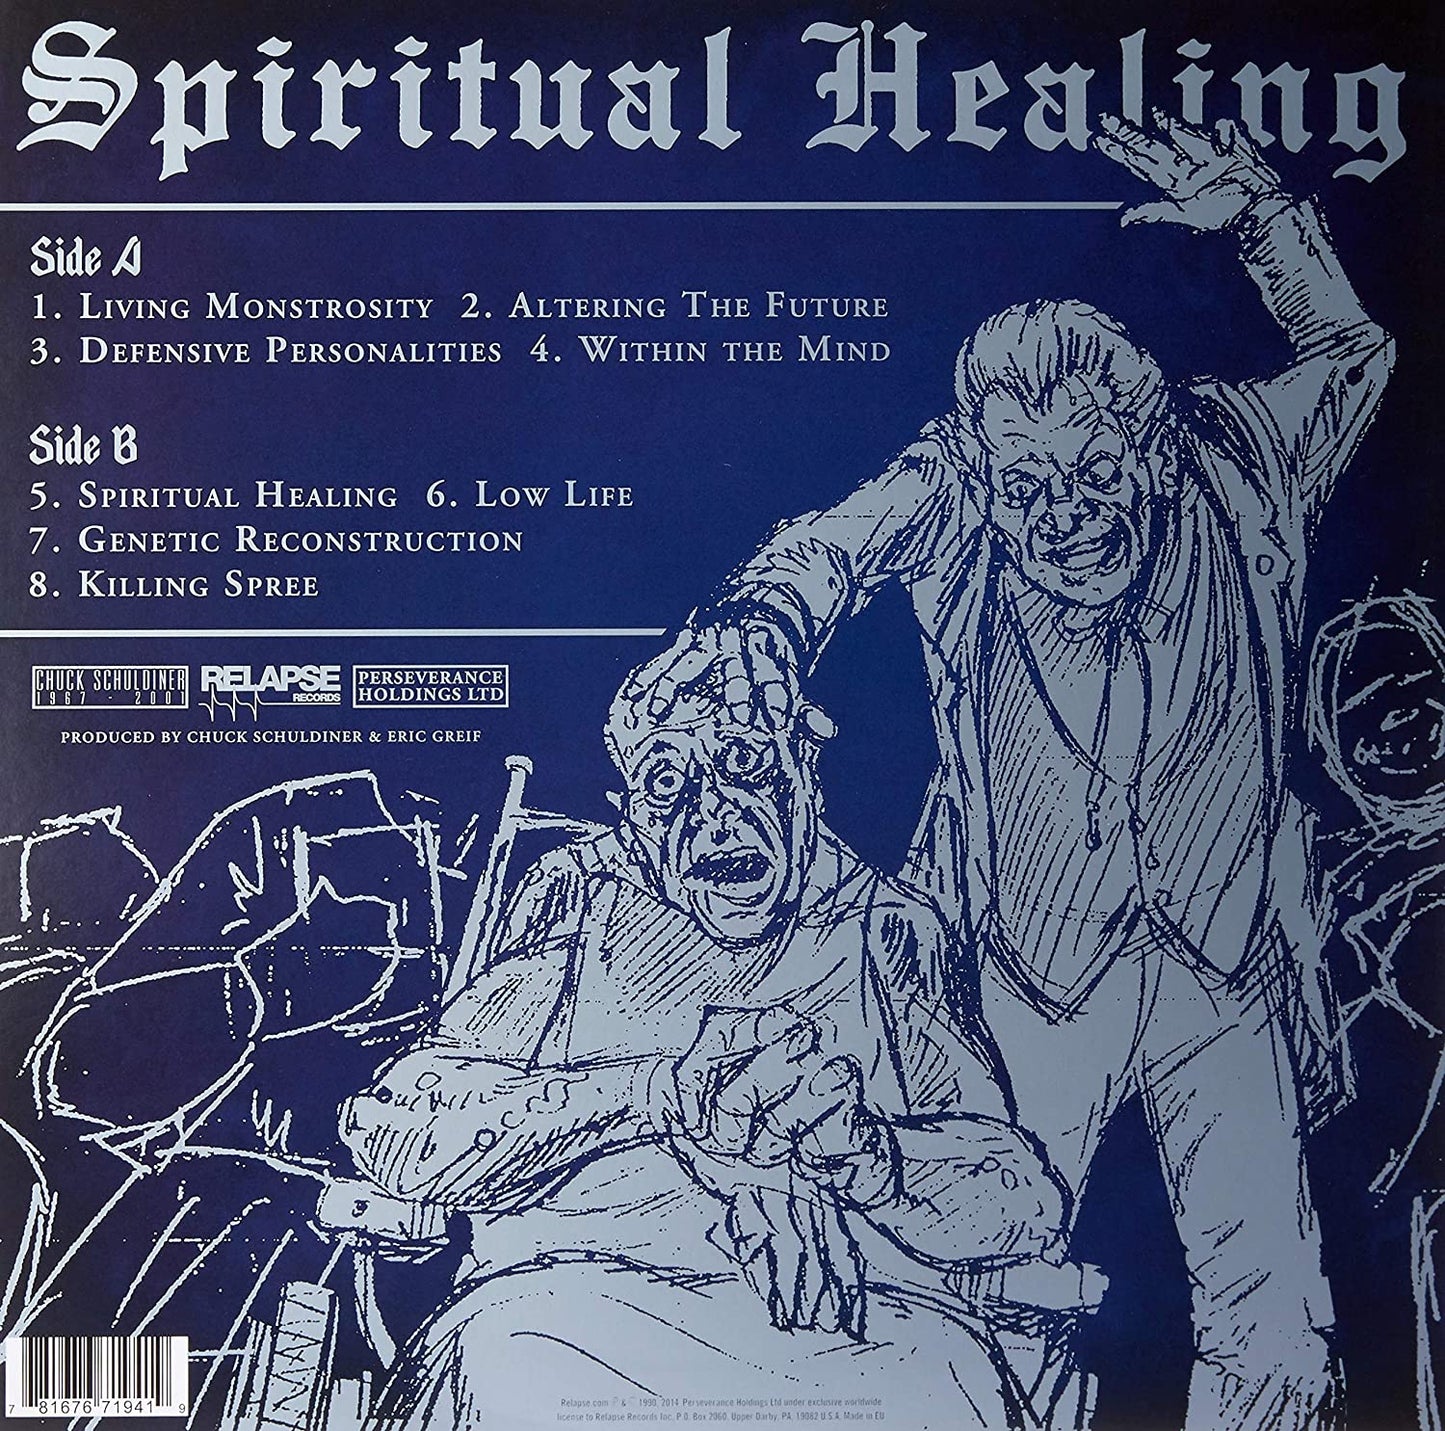 Death/Spiritual Healing [LP]